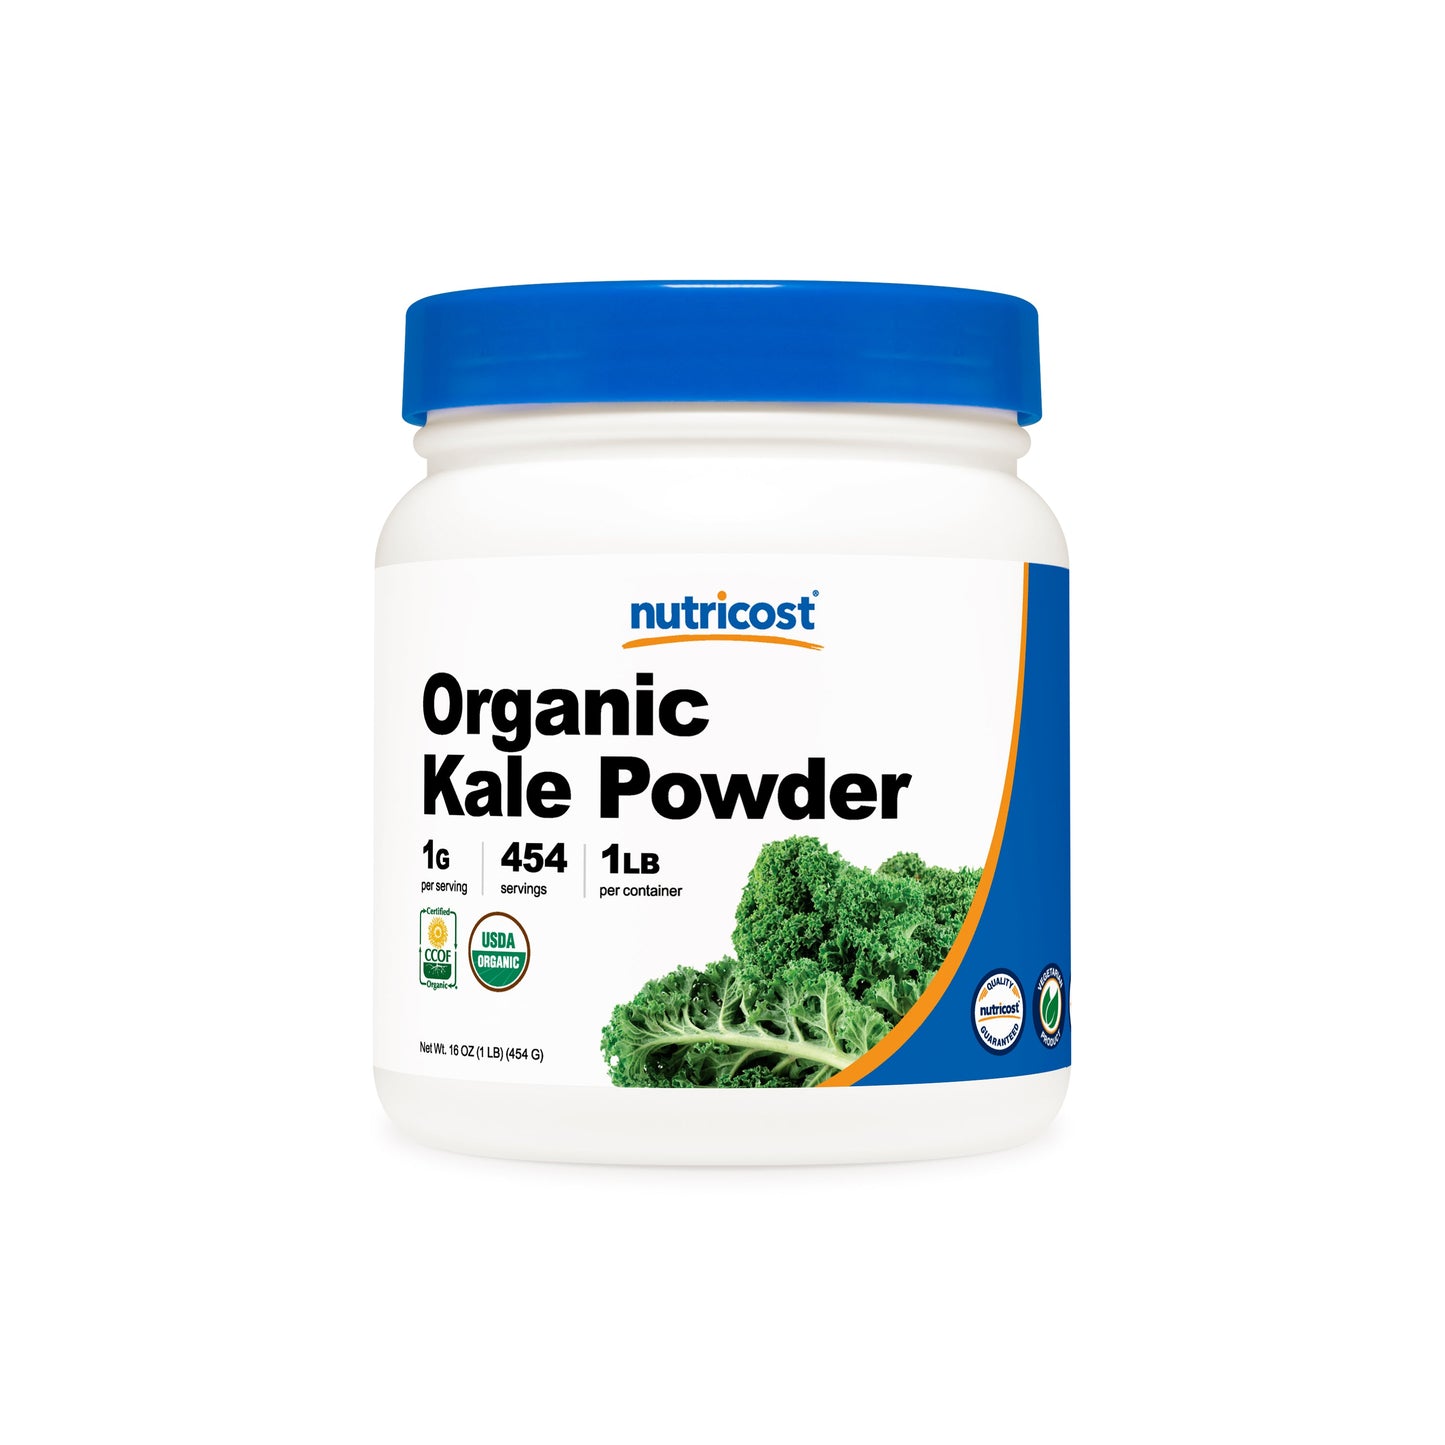 Nutricost Organic Kale Powder